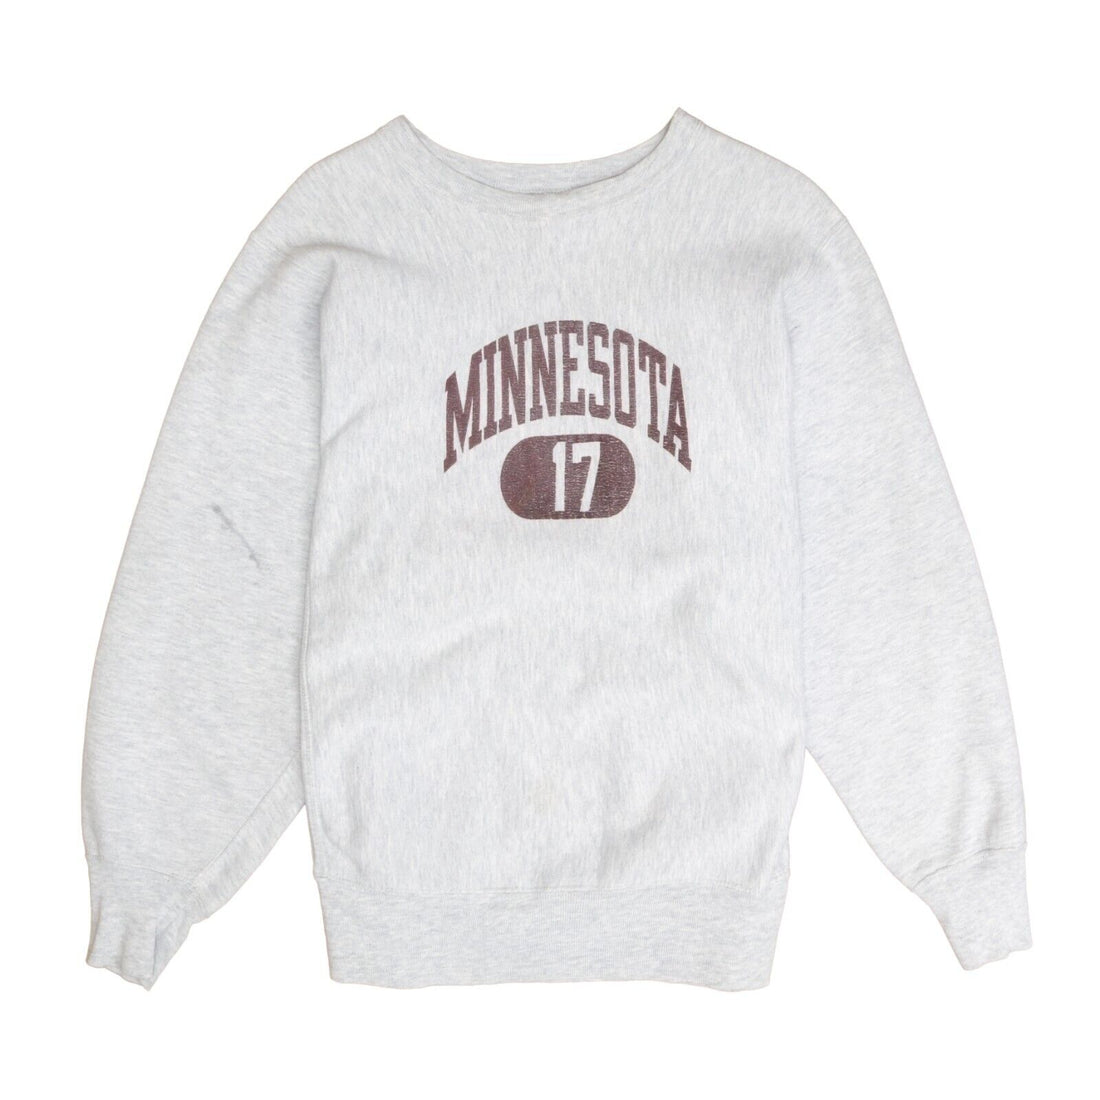 Vintage Minnesota Golden Gopher Champion Reverse Weave Sweatshirt Large 80s NCAA